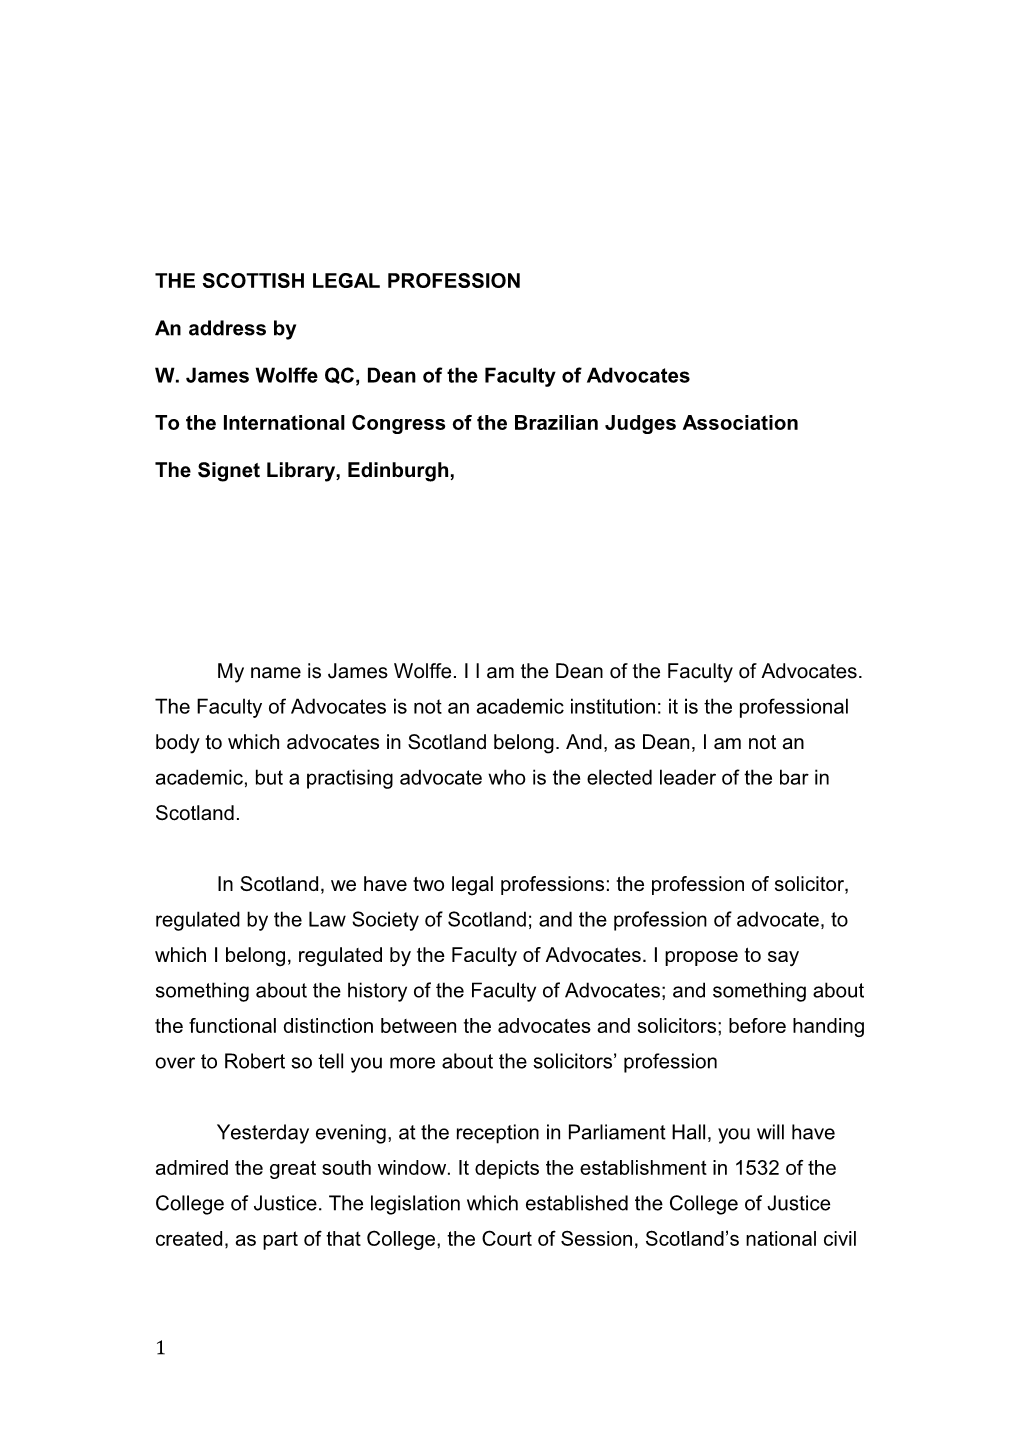 The Scottish Legal Profession